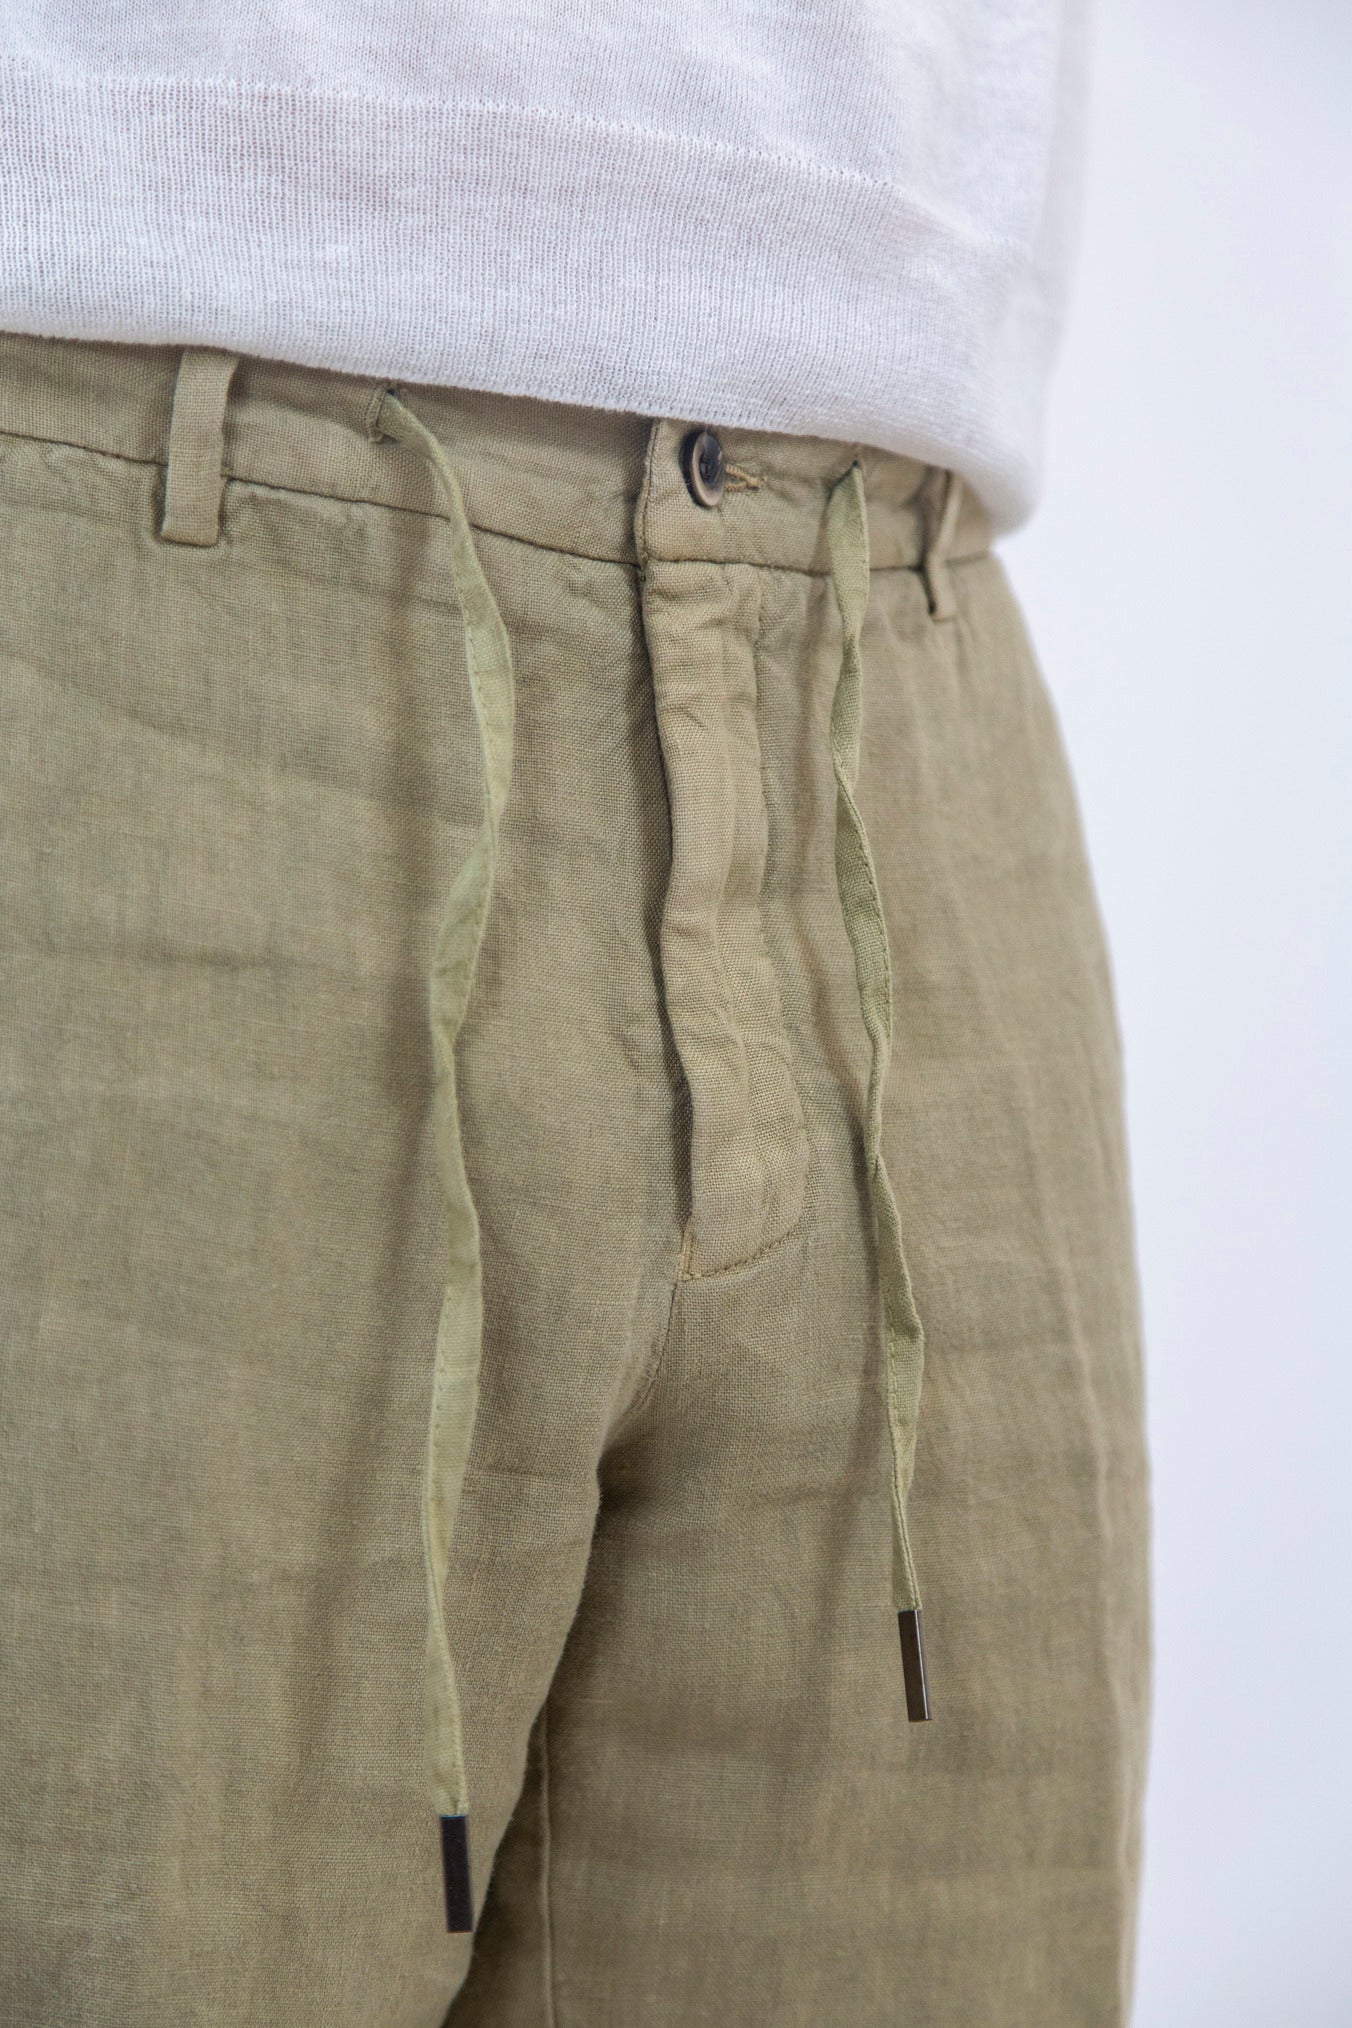 GUARINO Bermuda Shorts with Drawstring Linen Beige